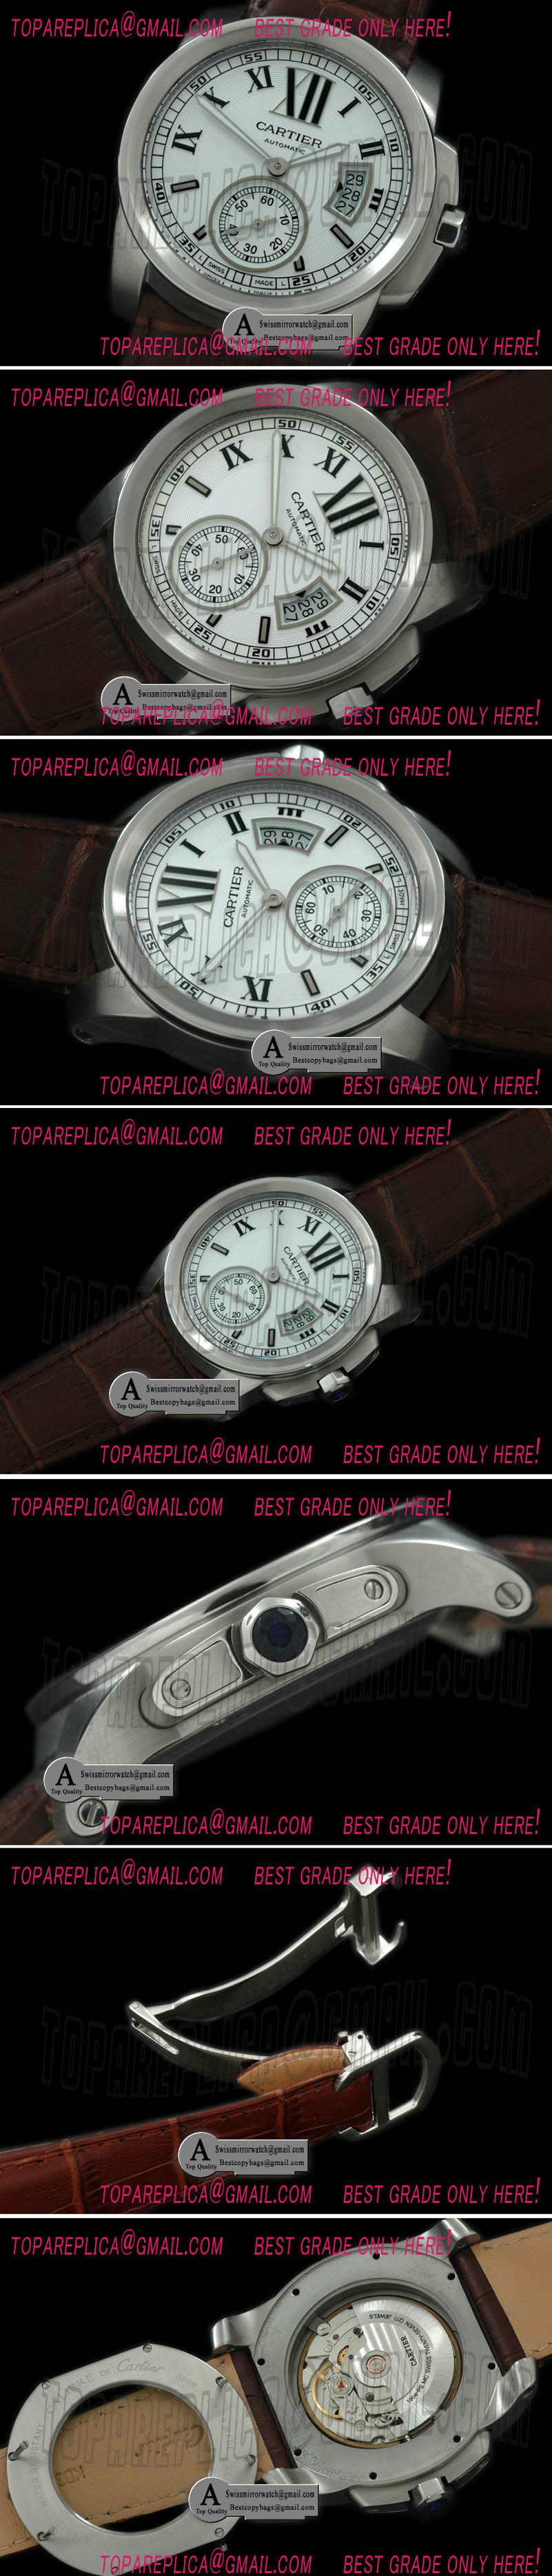 Cartier W7100013 Calibre de Cartier SS/Leather White Asian 2836 Replica Watches